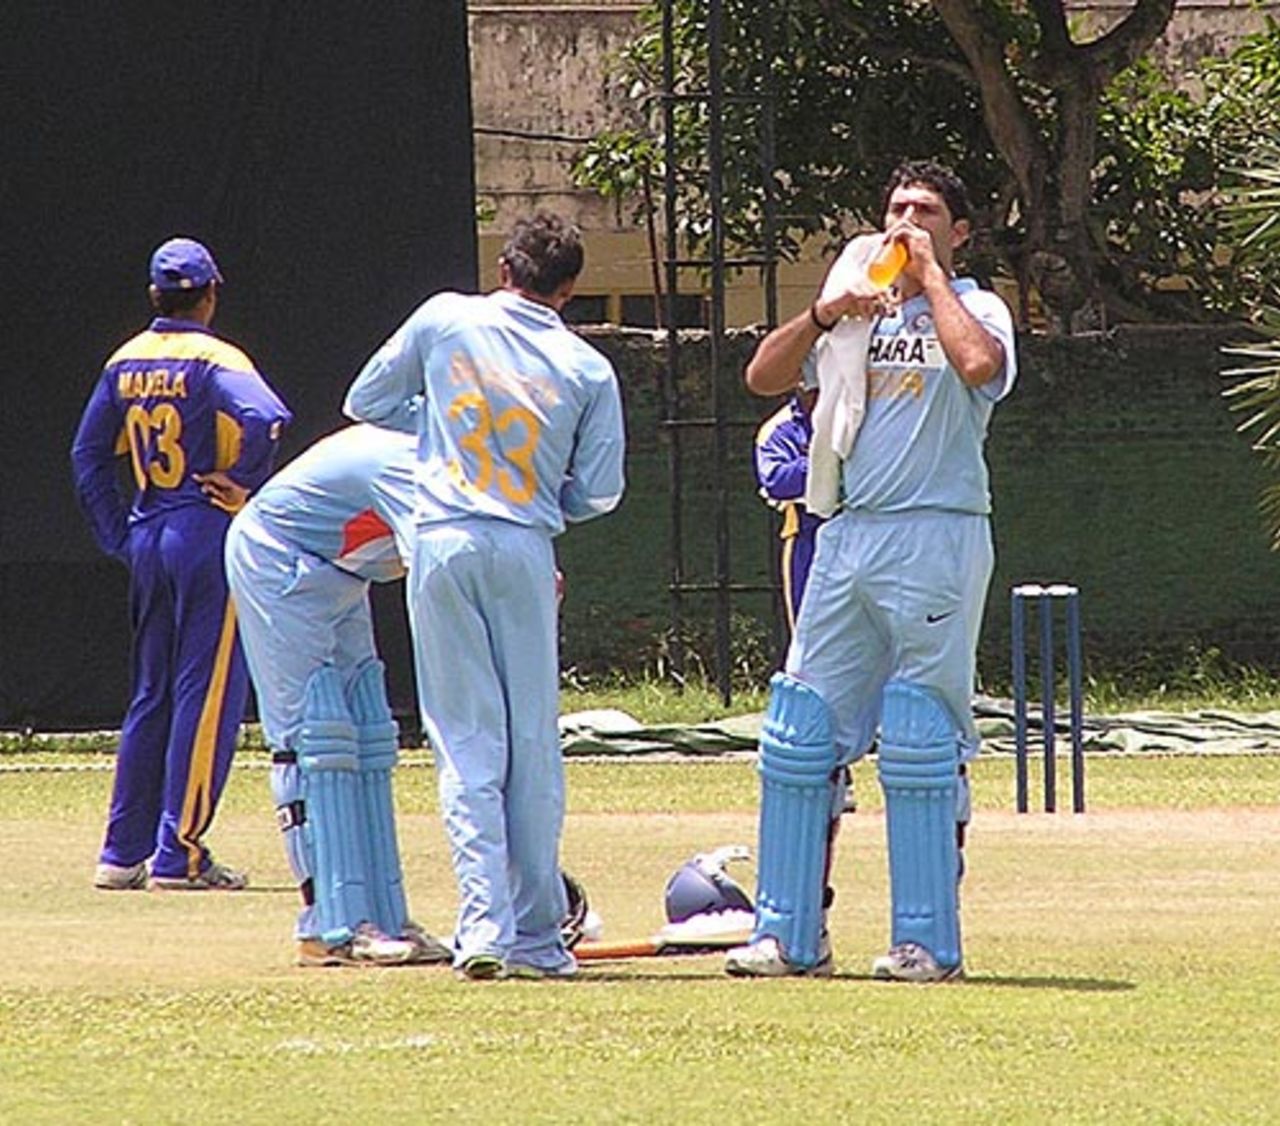 Indian batsmen take a breather, Sri Lankan XI vs Indians, PSS, Colombo, August 15, 2008